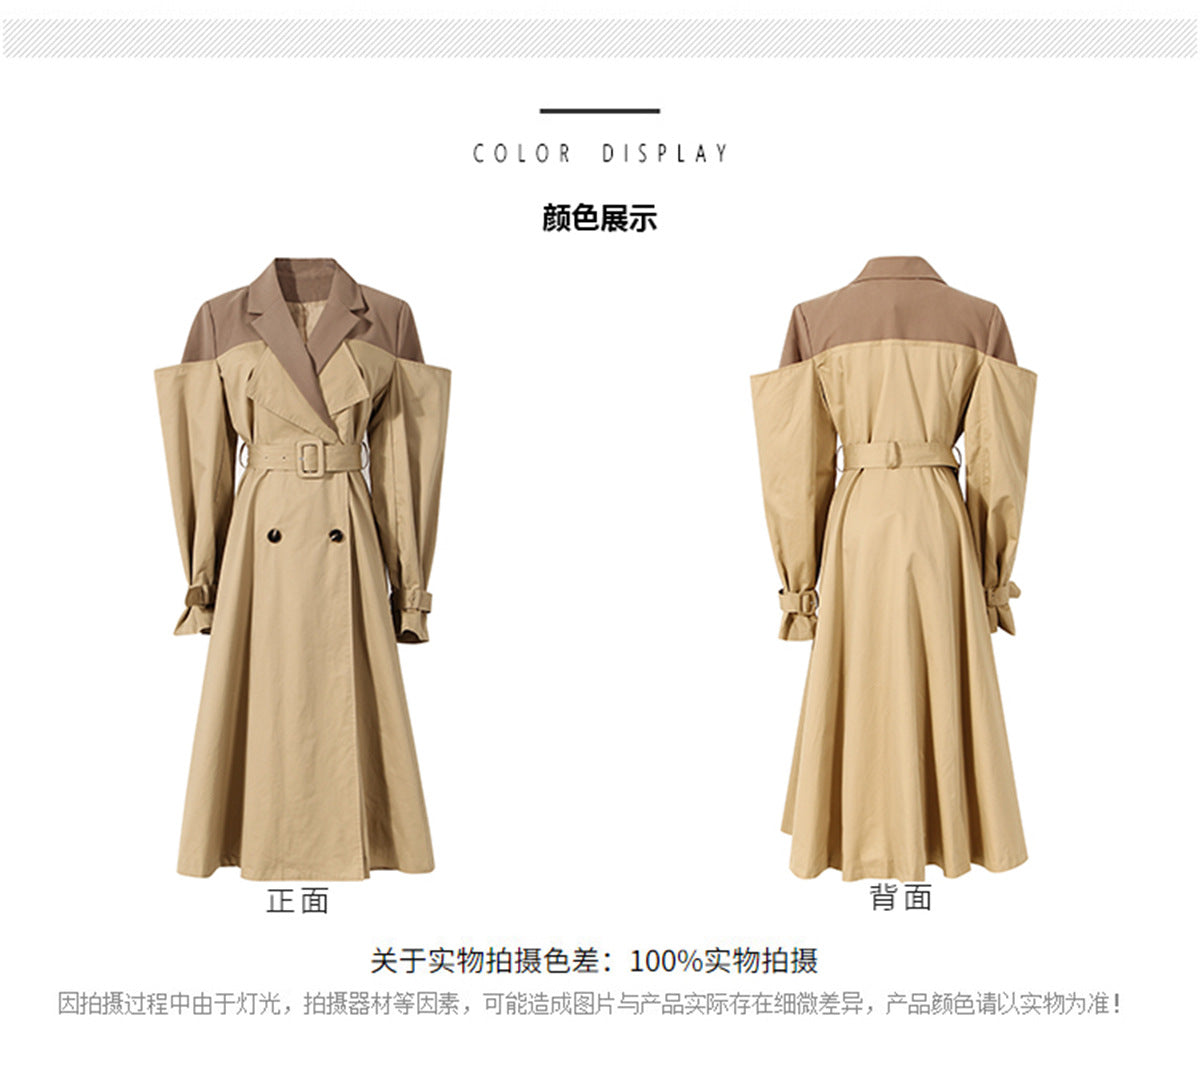 Designed Khaki Color Women Fall Trenchcoat-Outerwear-JEWELRYSHEOWN